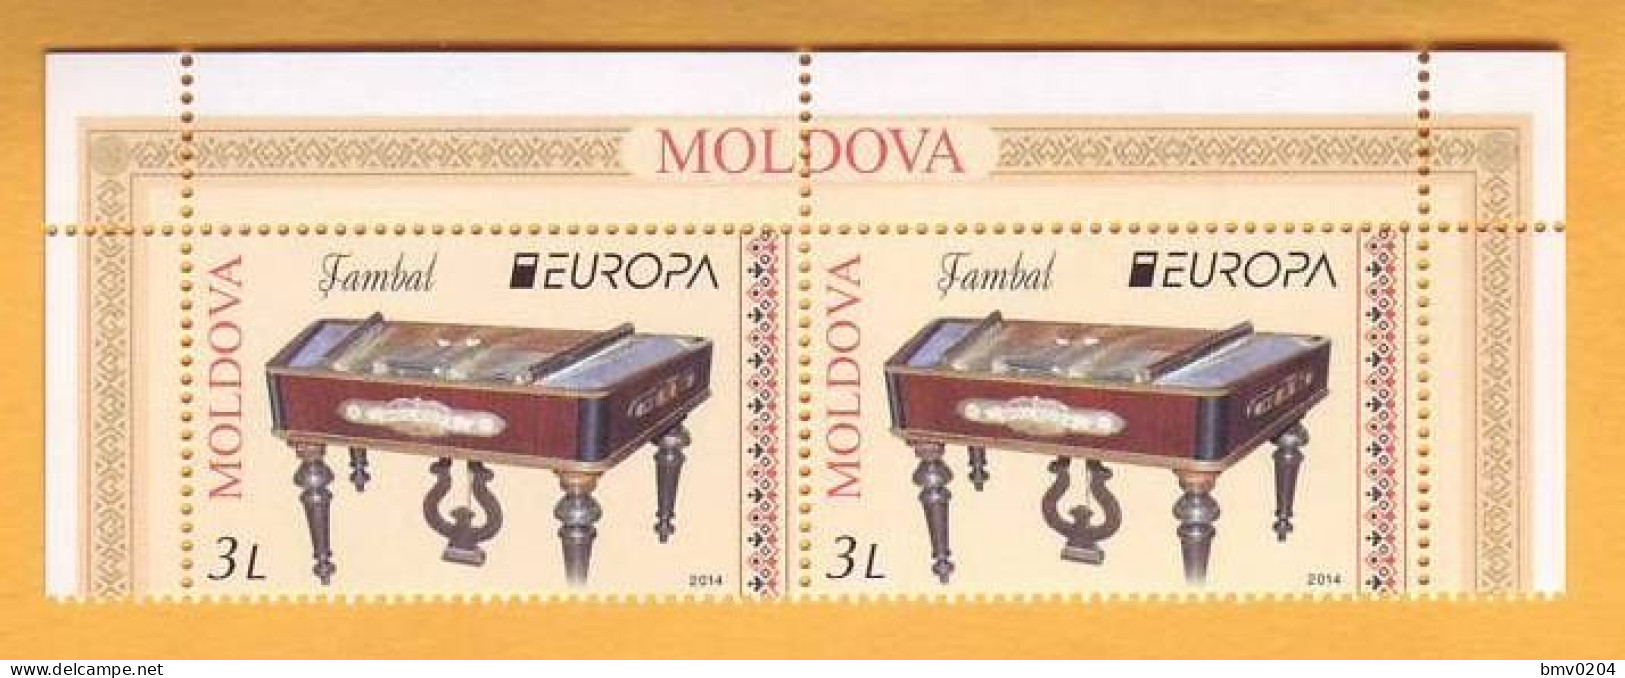 2014 Moldova Moldavie Moldau  Europa CEPT National Musical Instruments. Dulcimer. 2v Mint - Moldavie